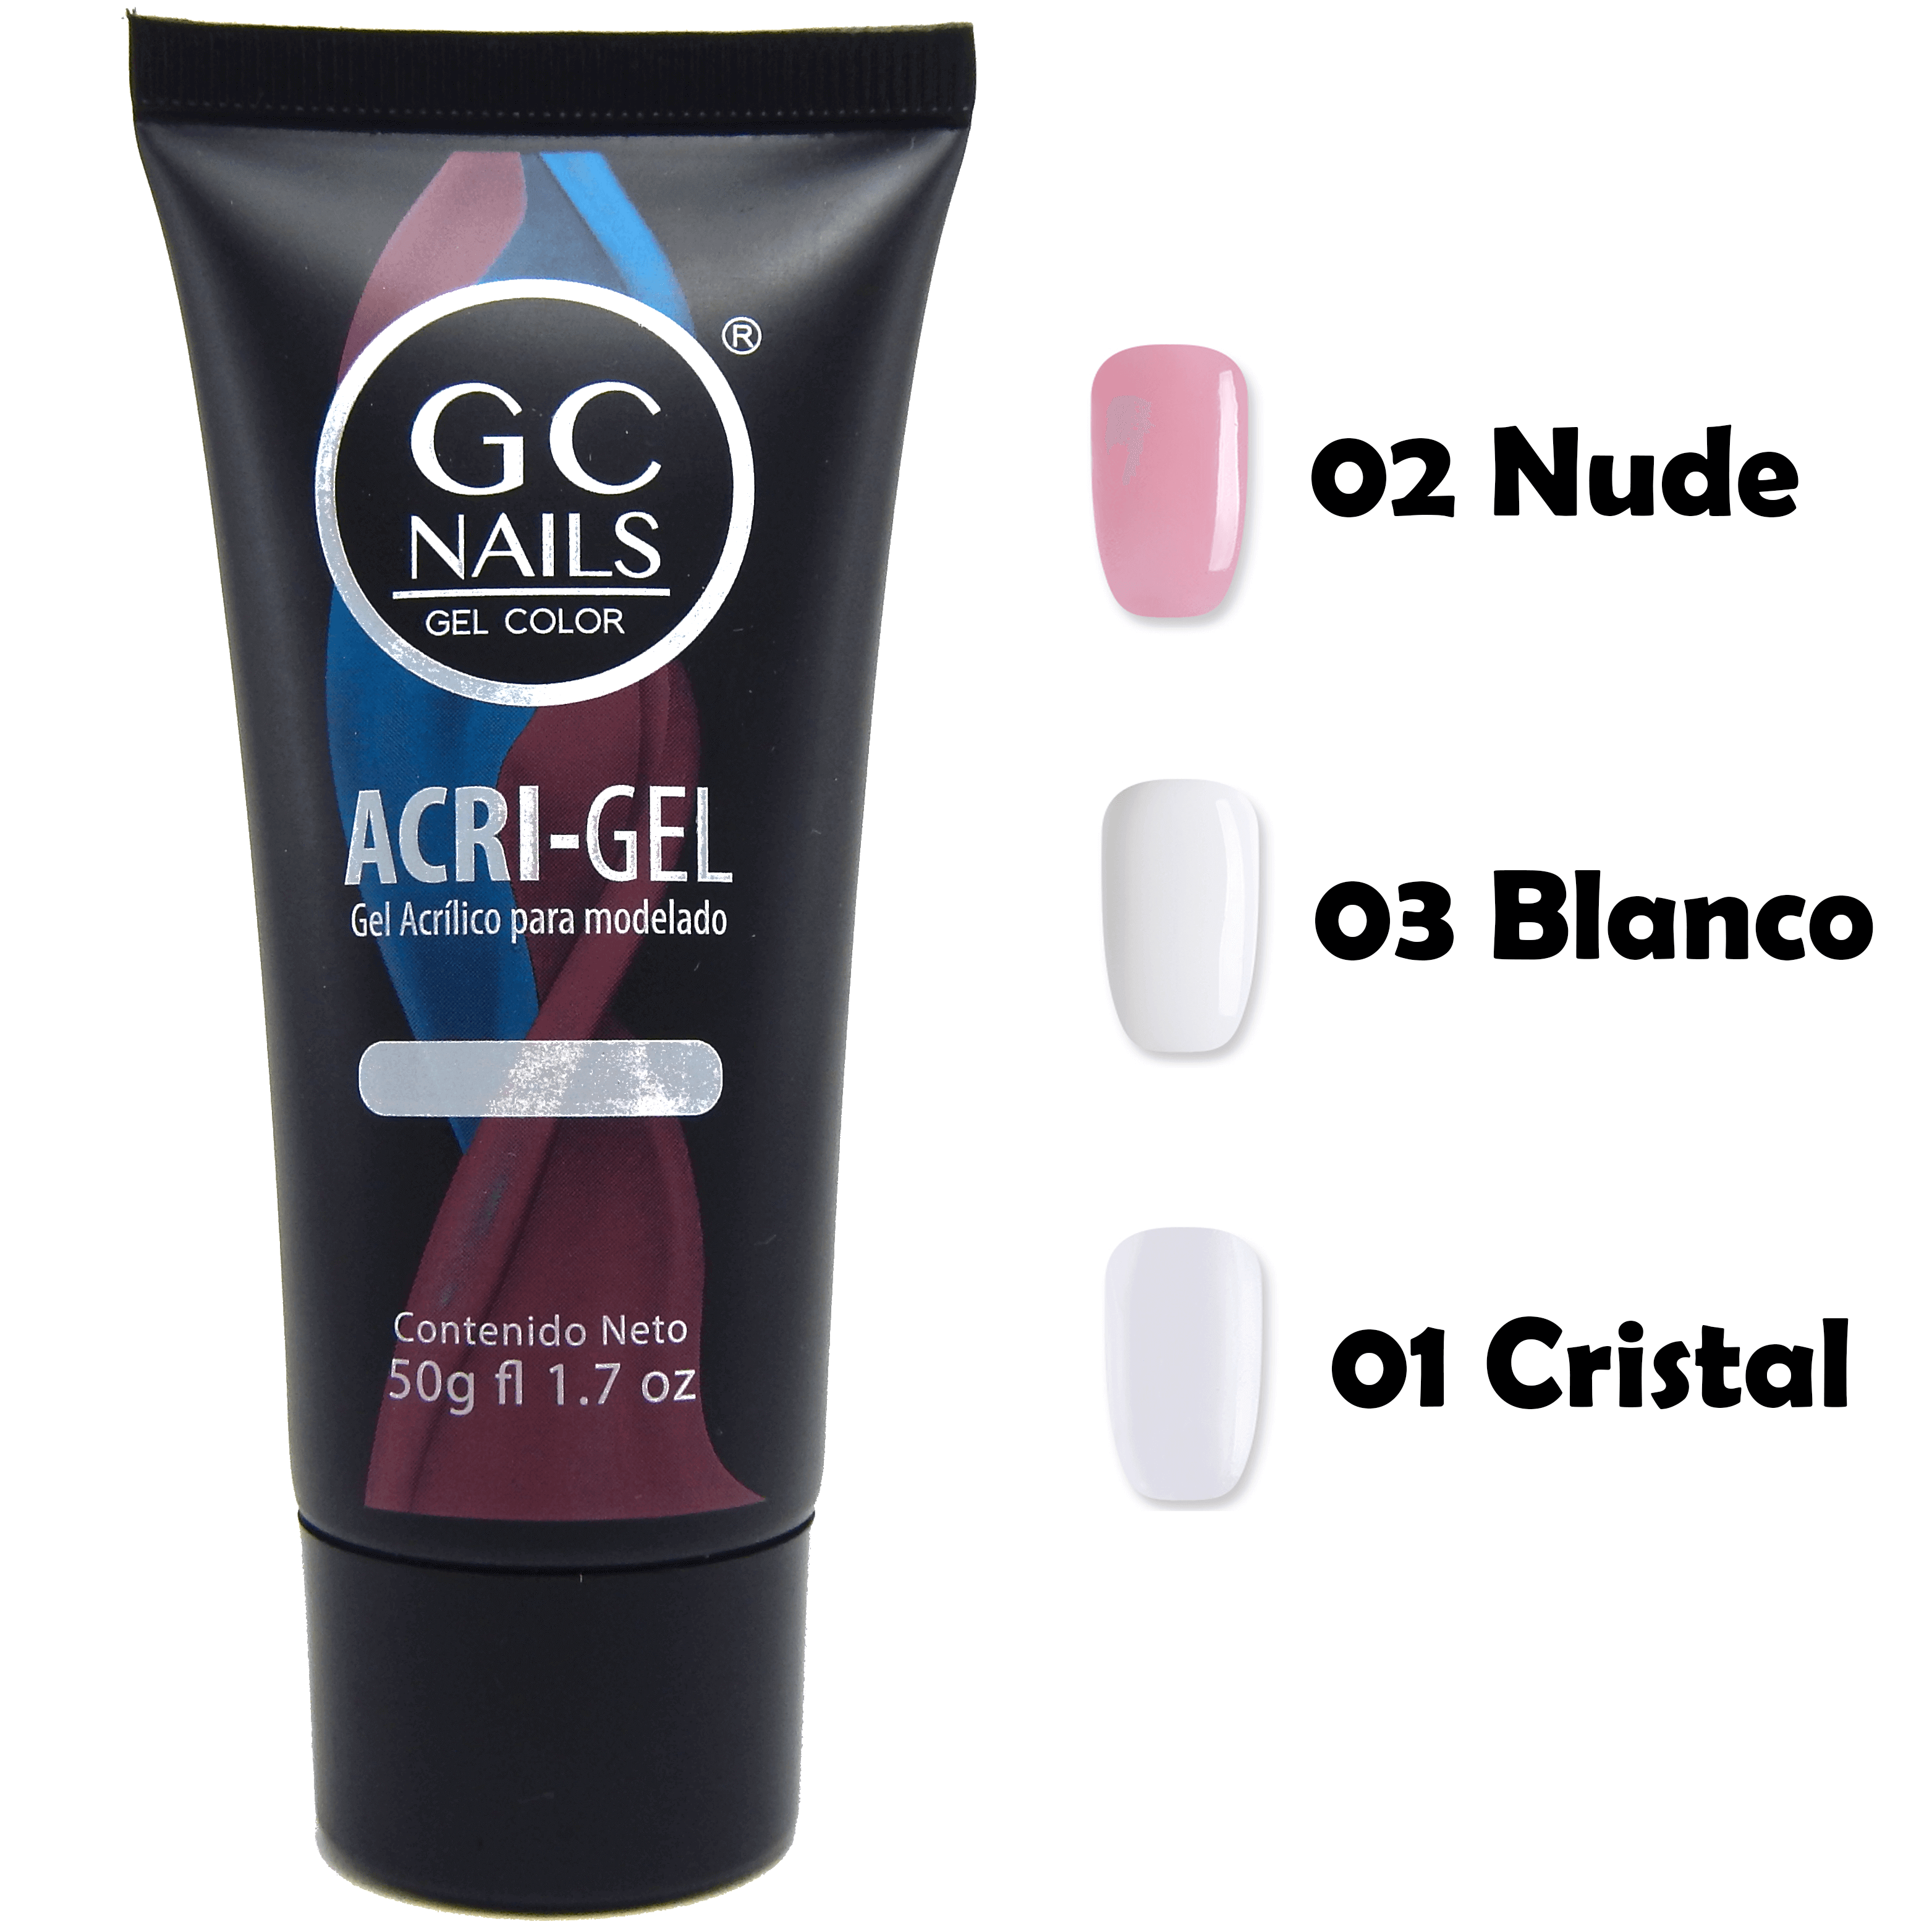 Acrigel Gc Nails